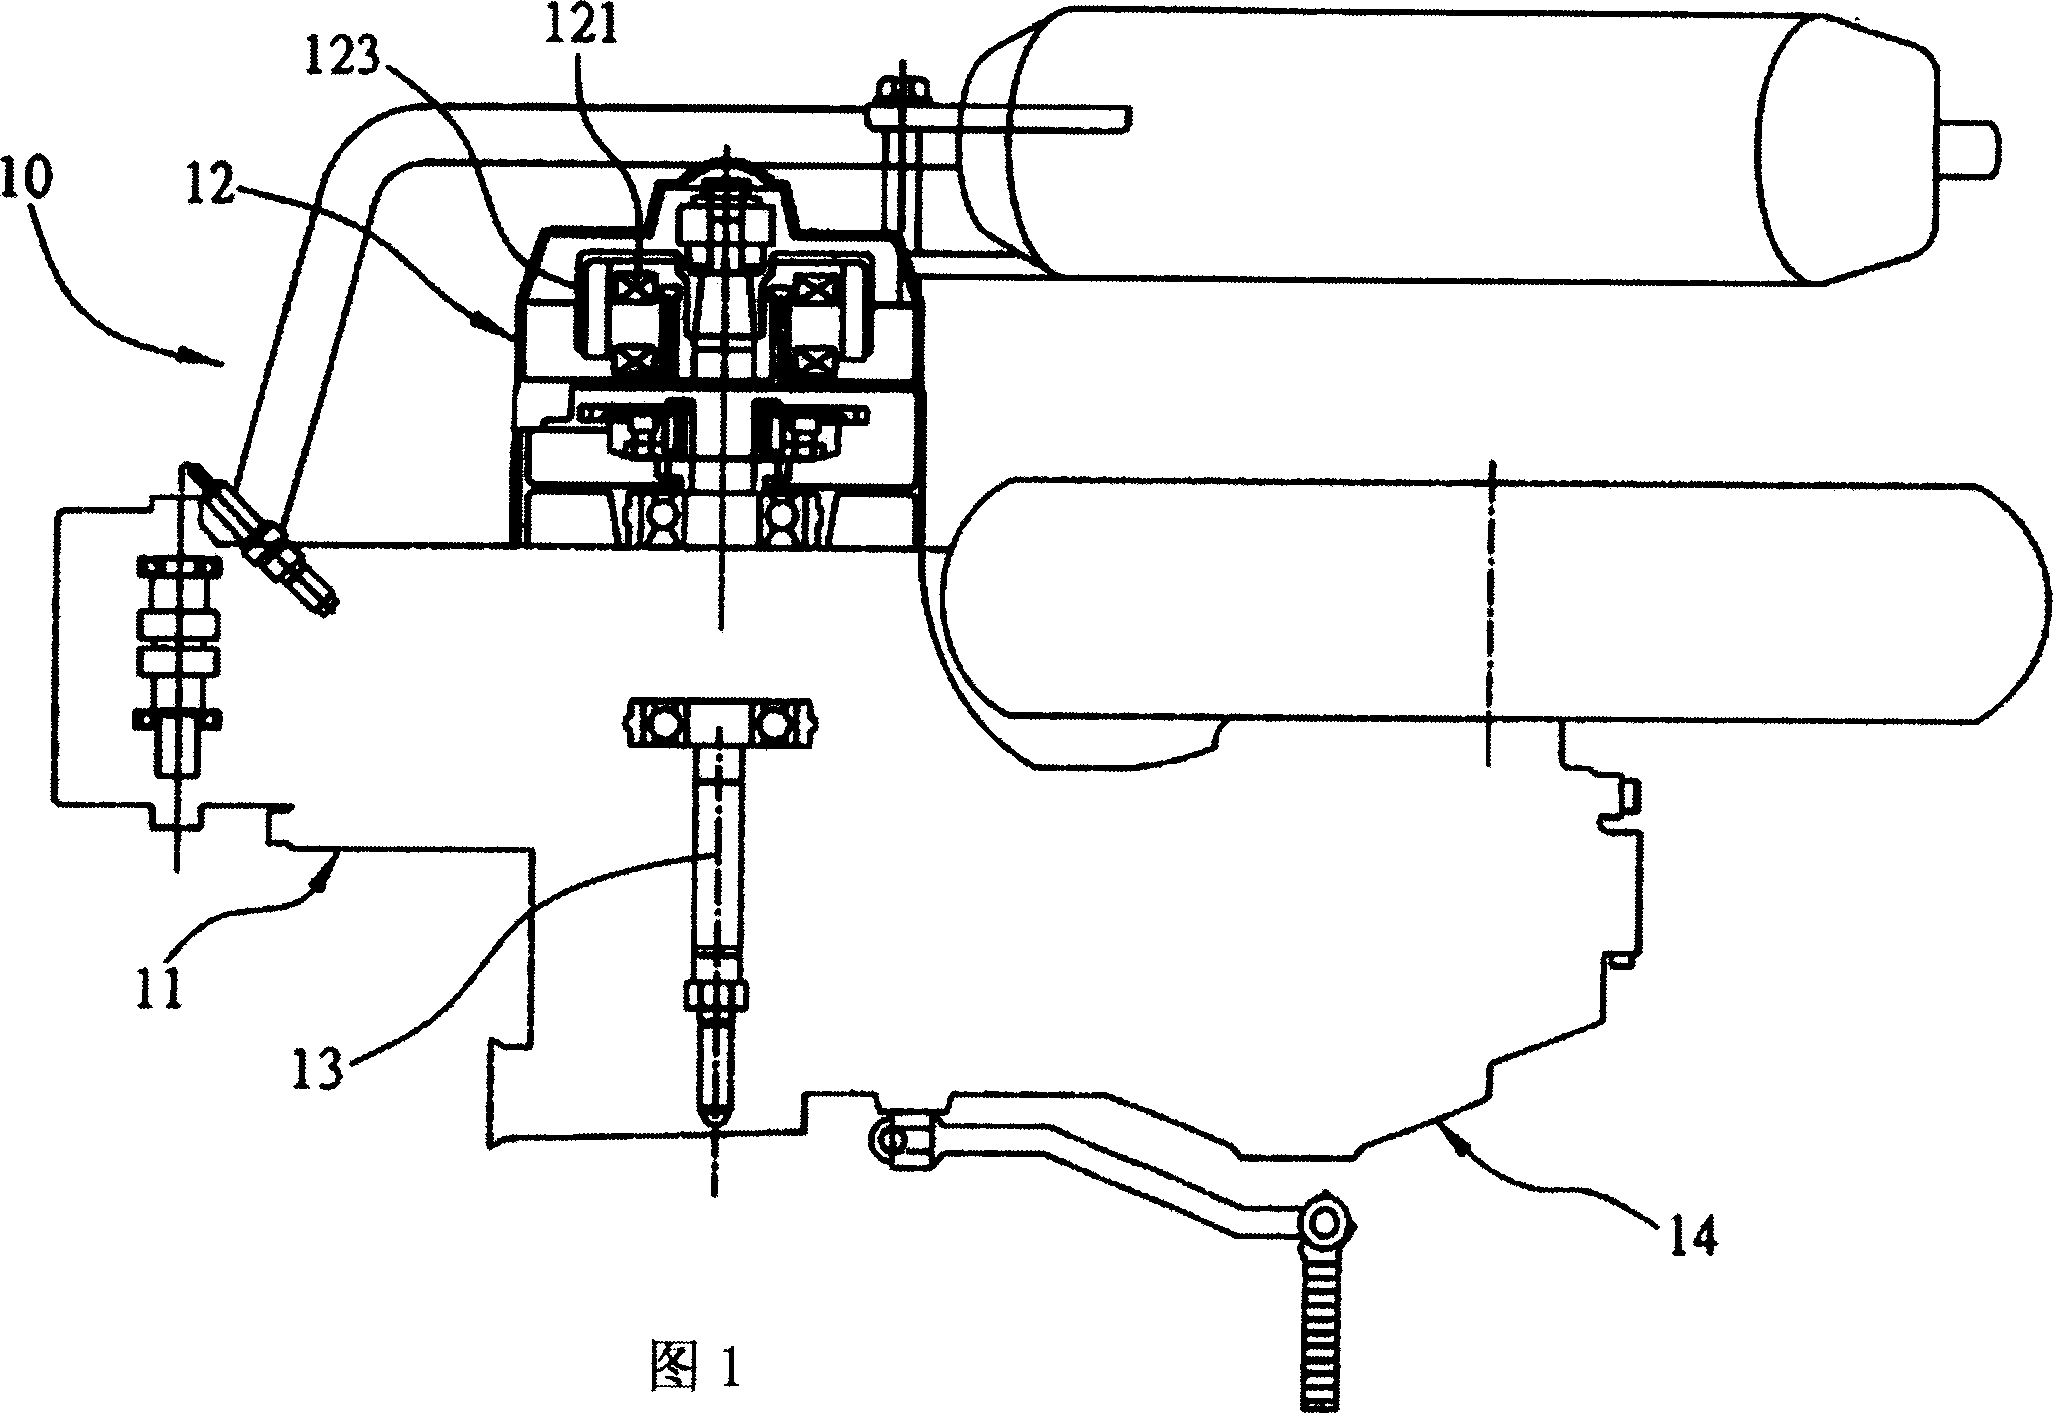 Composite power unit of engine